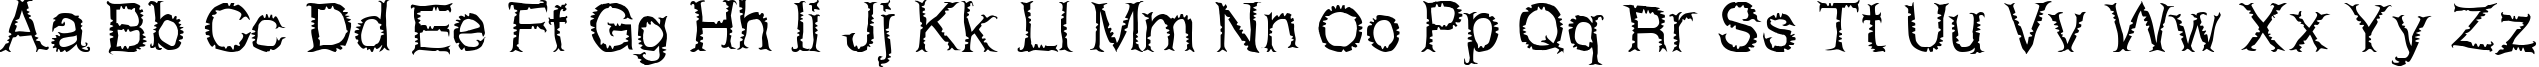 Пример написания английского алфавита шрифтом Netherworld